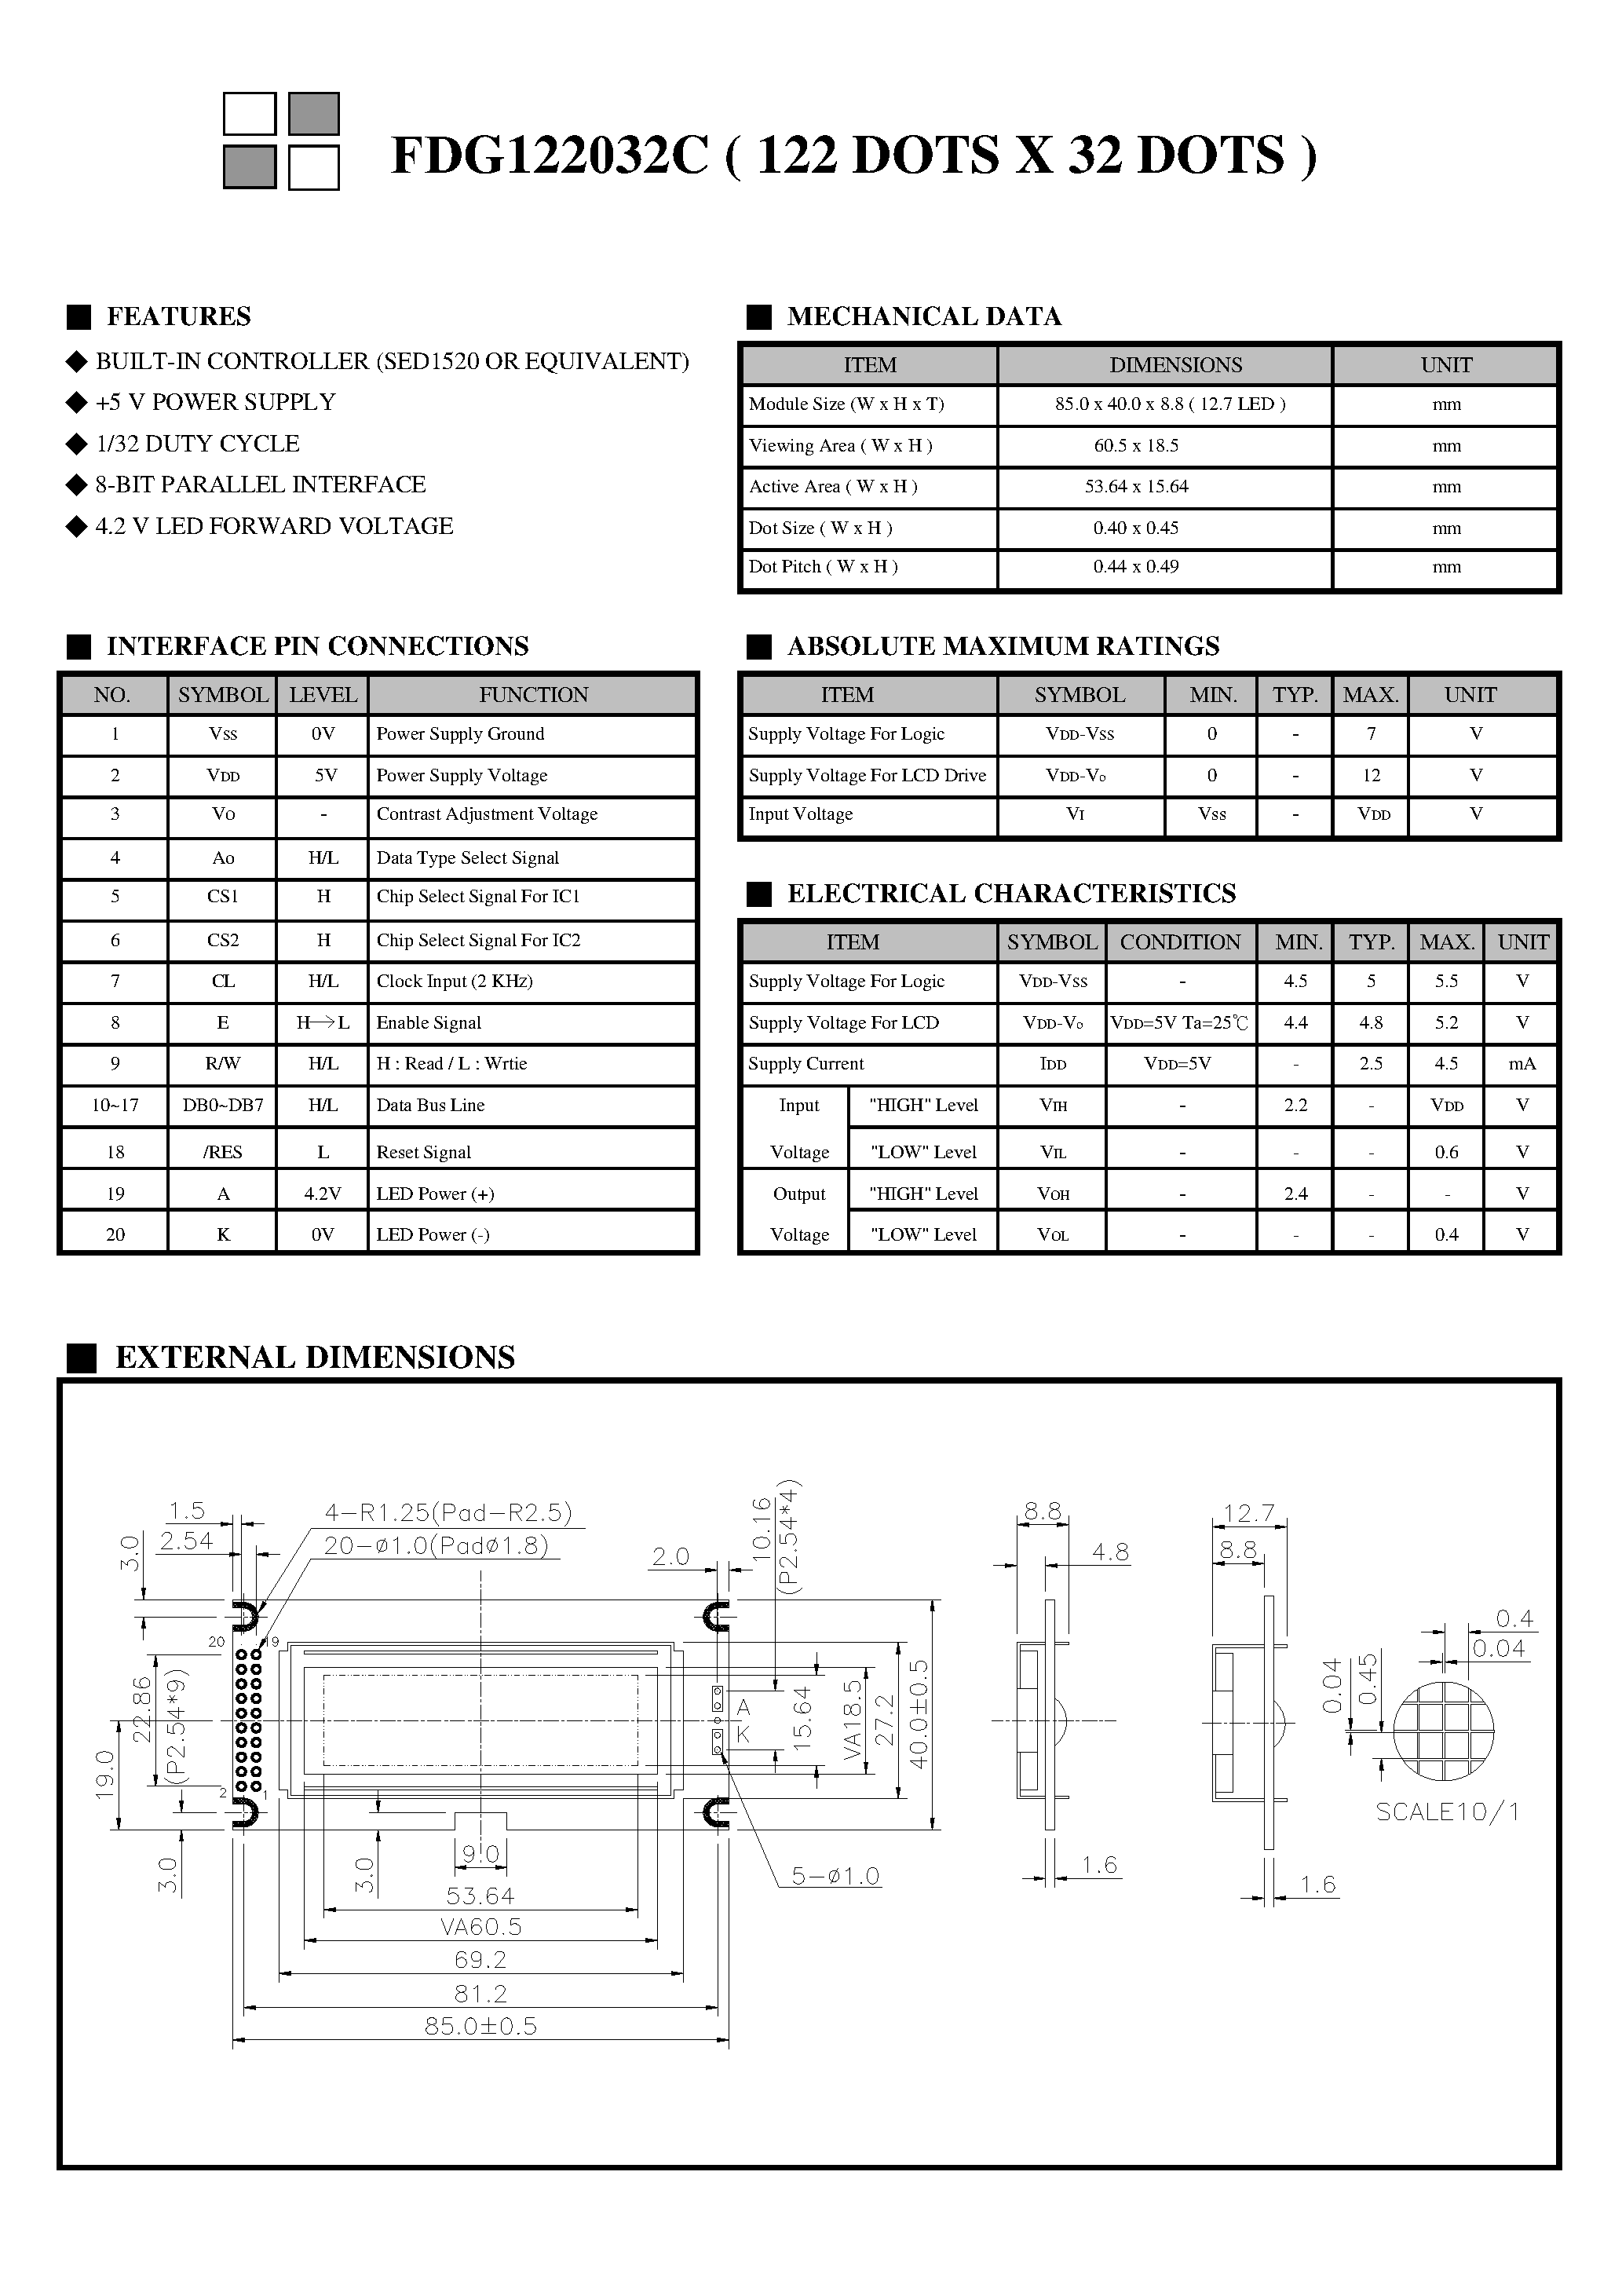 Datasheet FDG122032C - Monochrome Lcd Module page 2